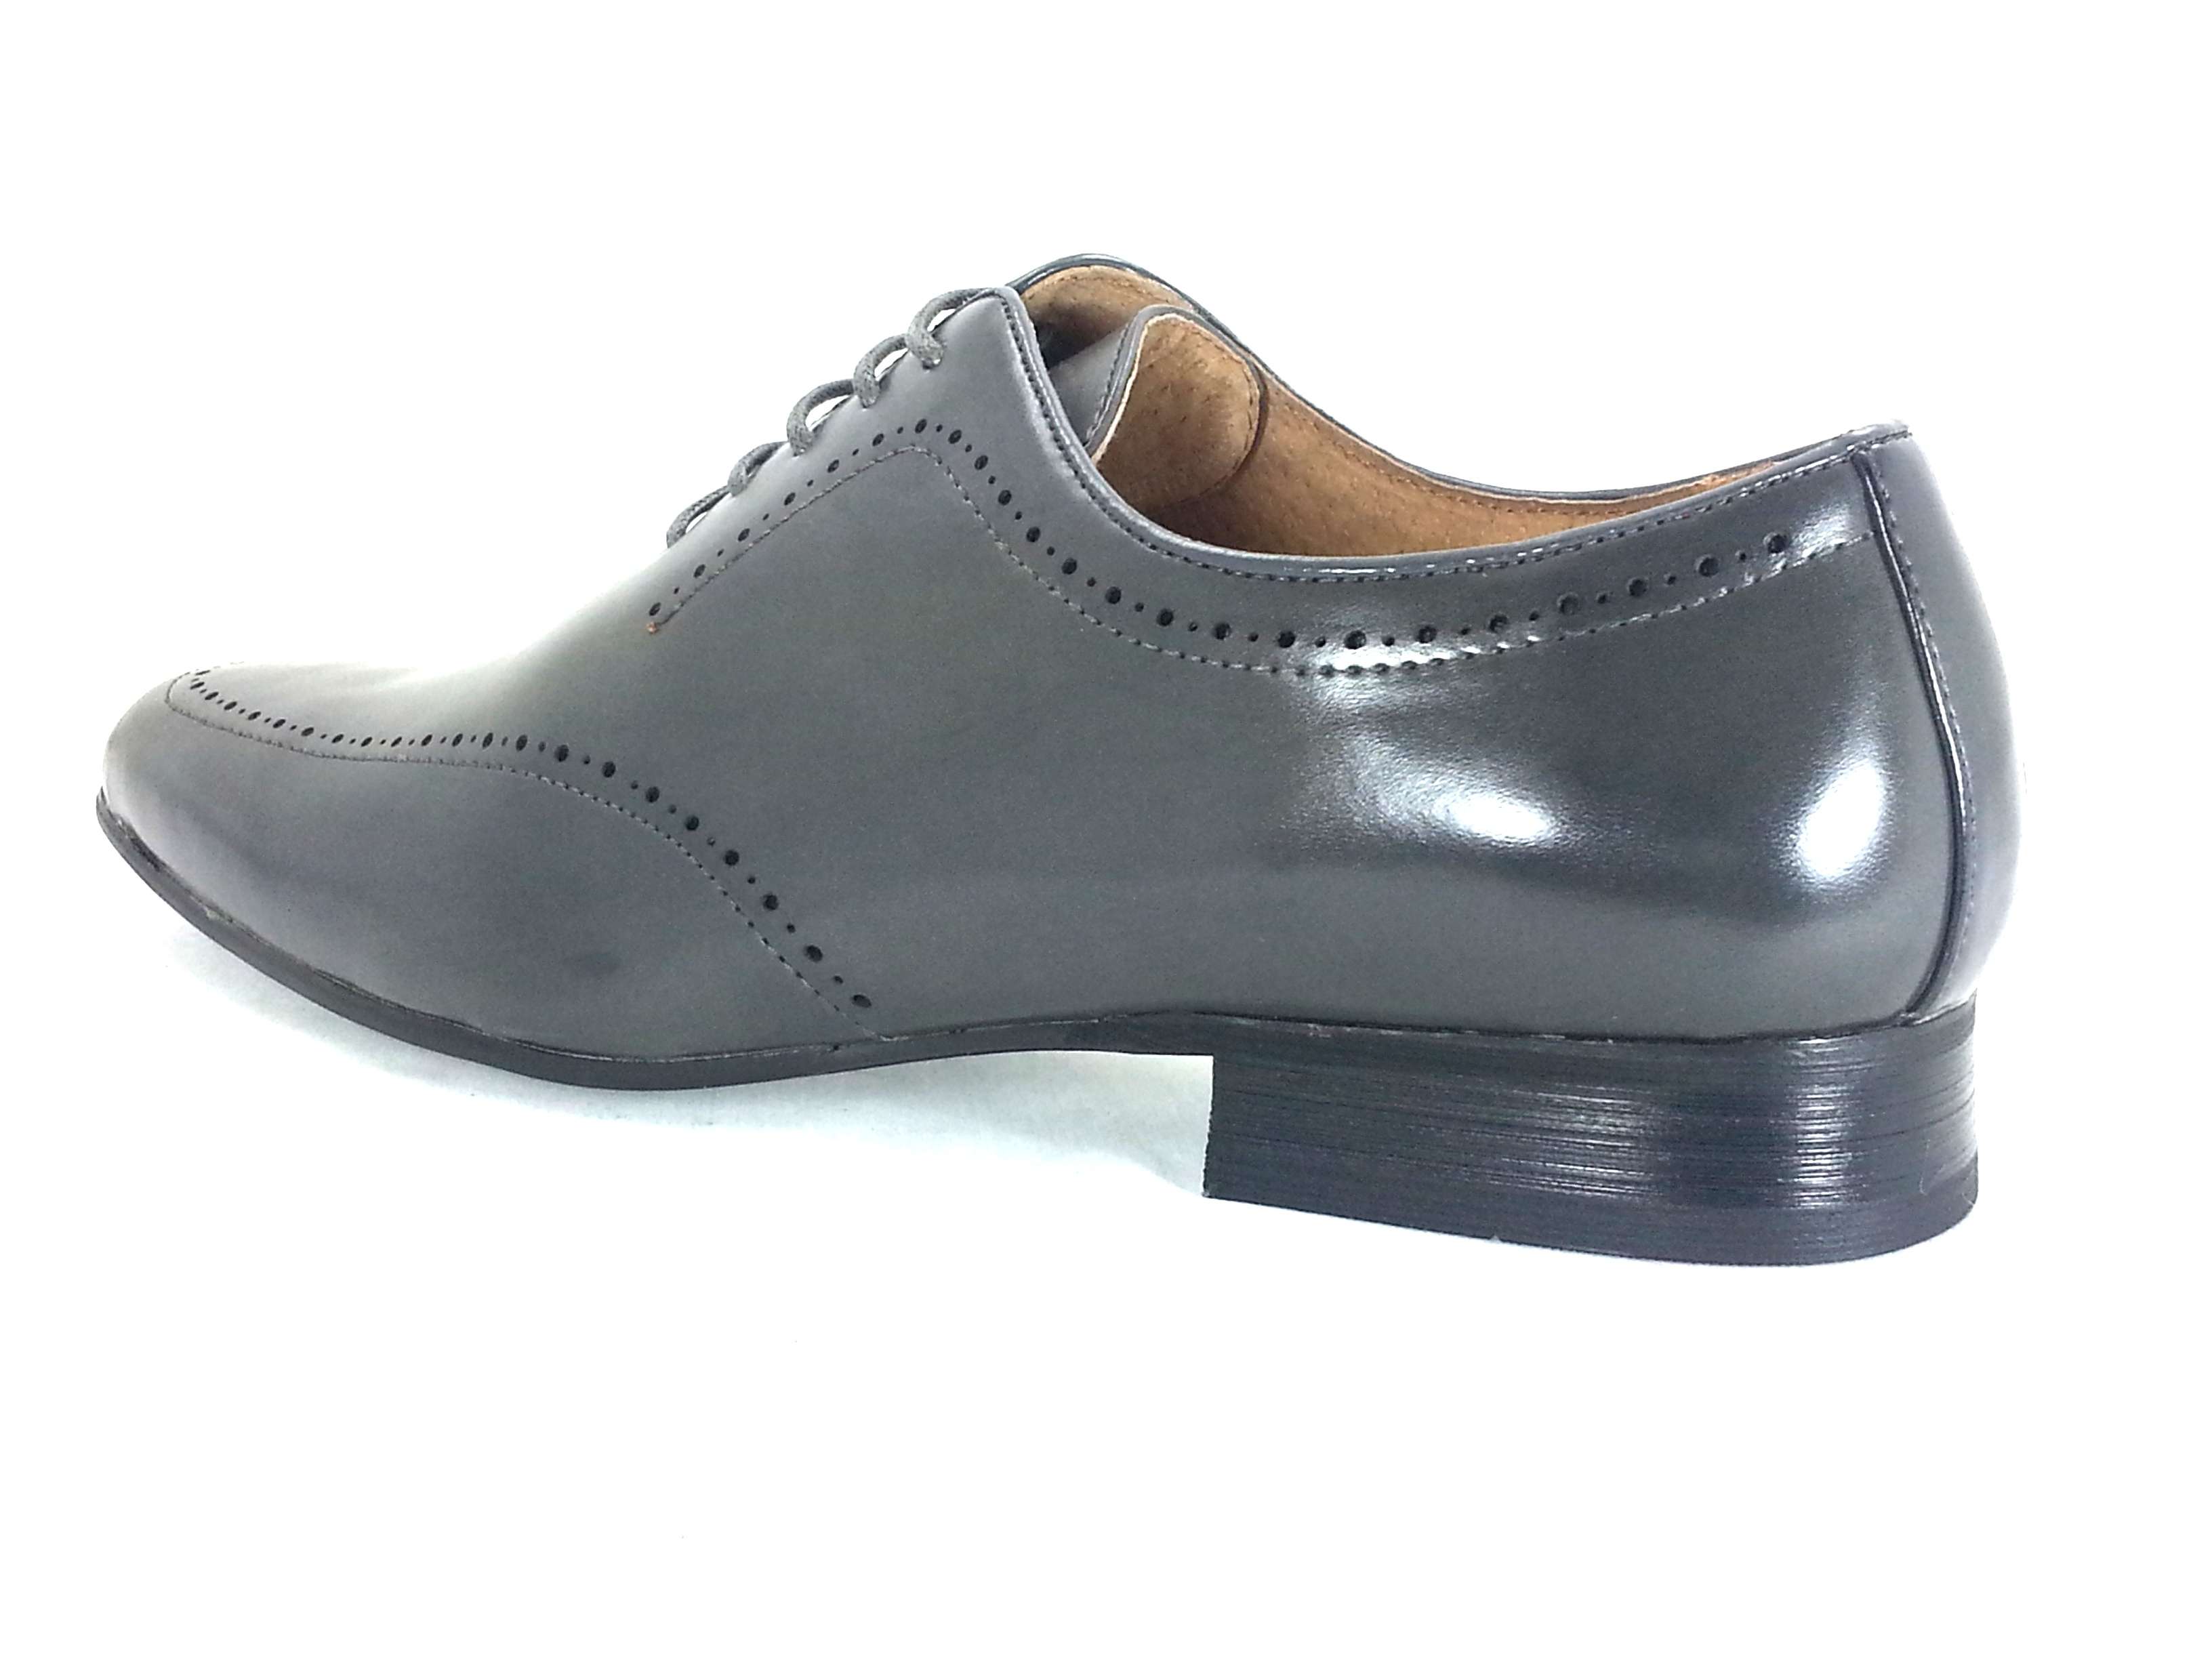 Mens Dress Shoes Majestic Grey Oxford Lace Up Fashion shoes | eBay